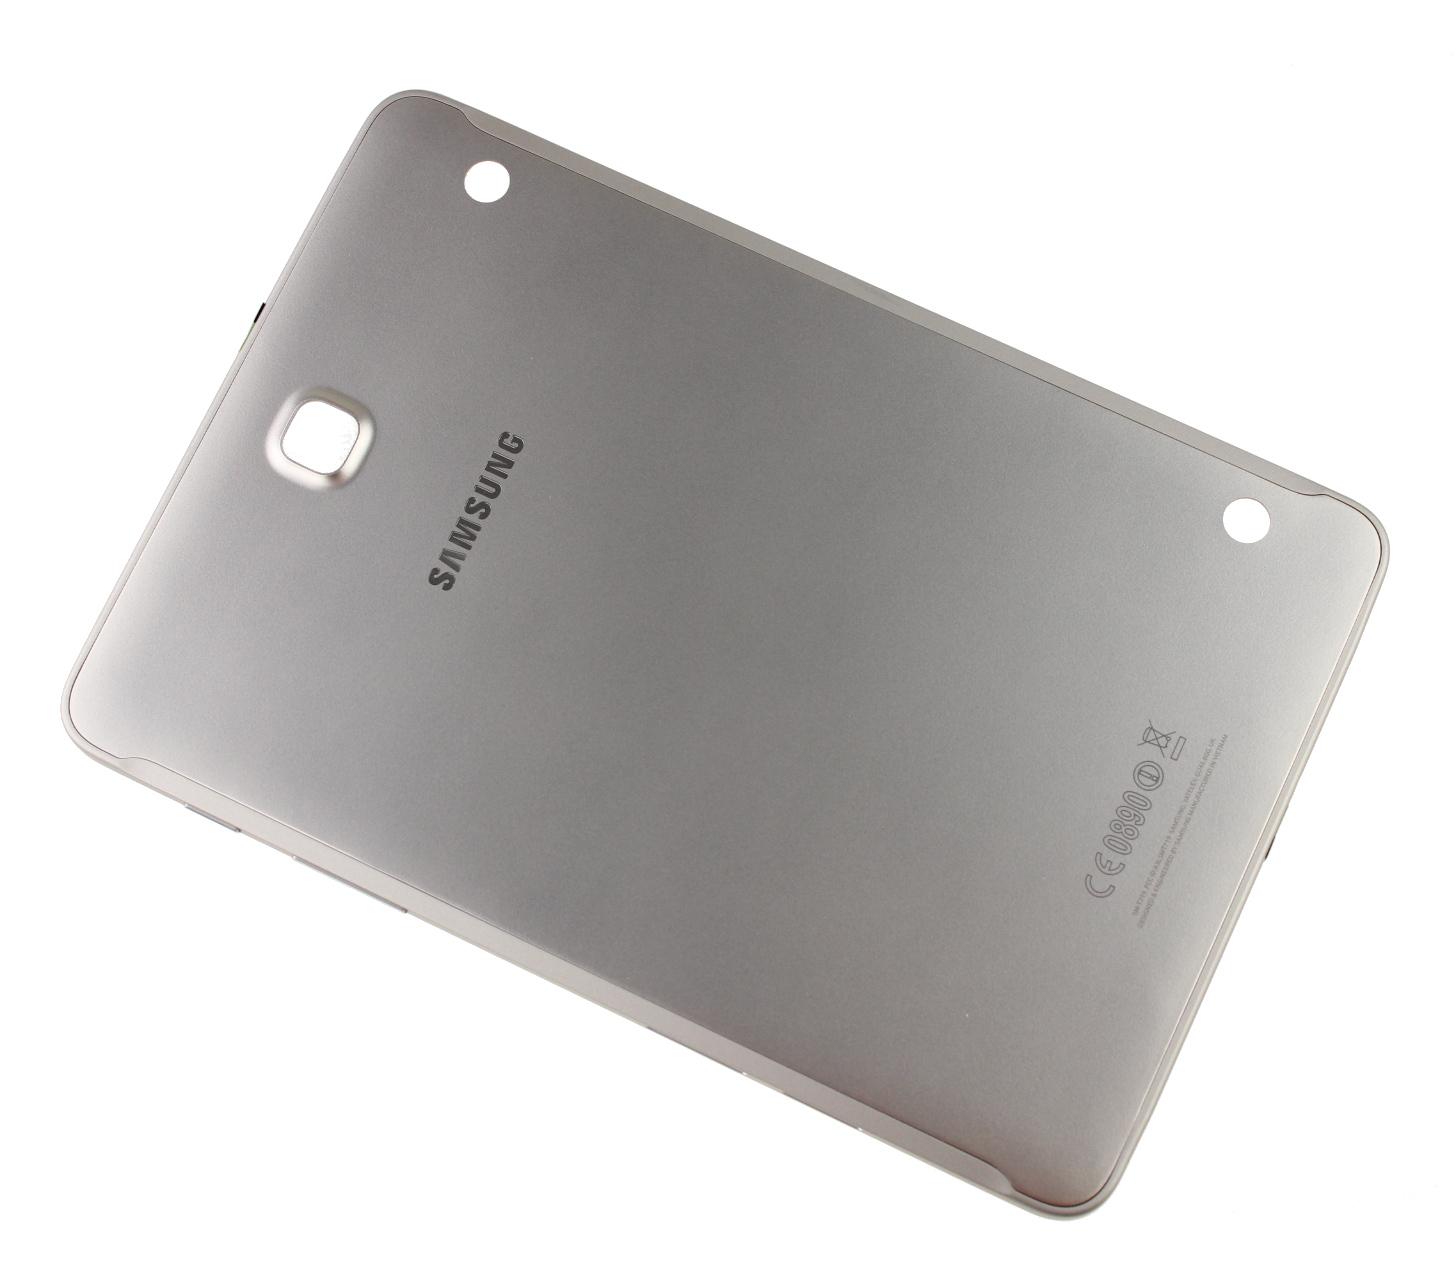 Originál kryt baterie/korpus Samsung Galaxy Tab 2 SM-T719 zlatý